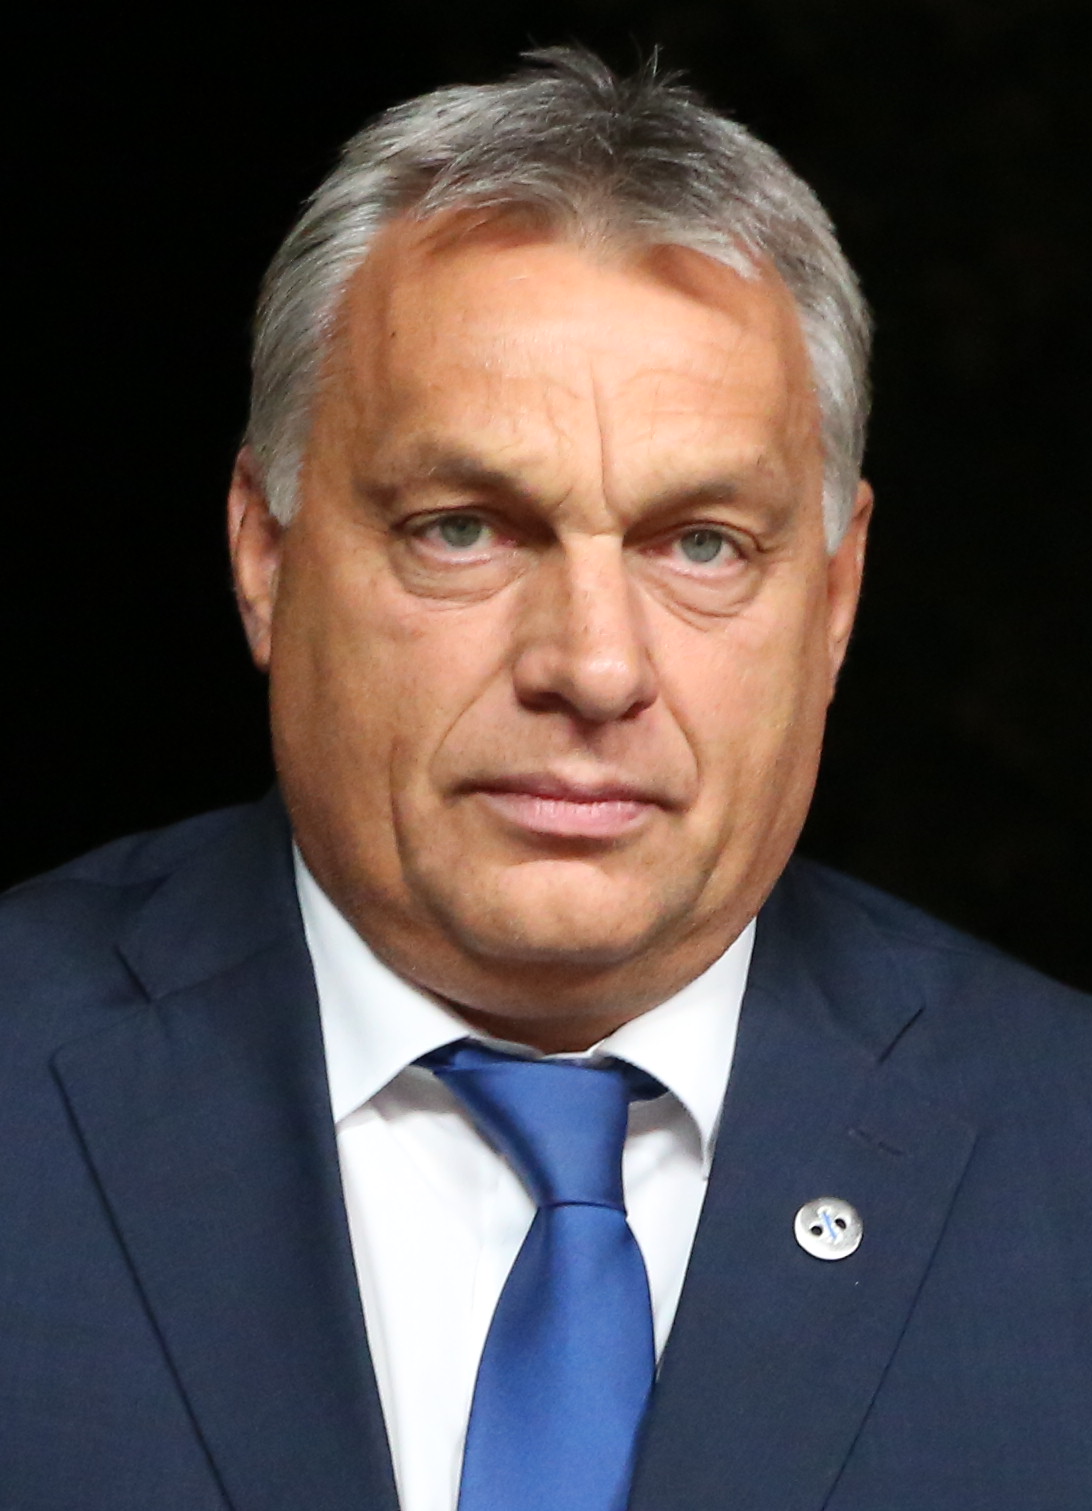 Springtime for Orbán – not so for Hungary